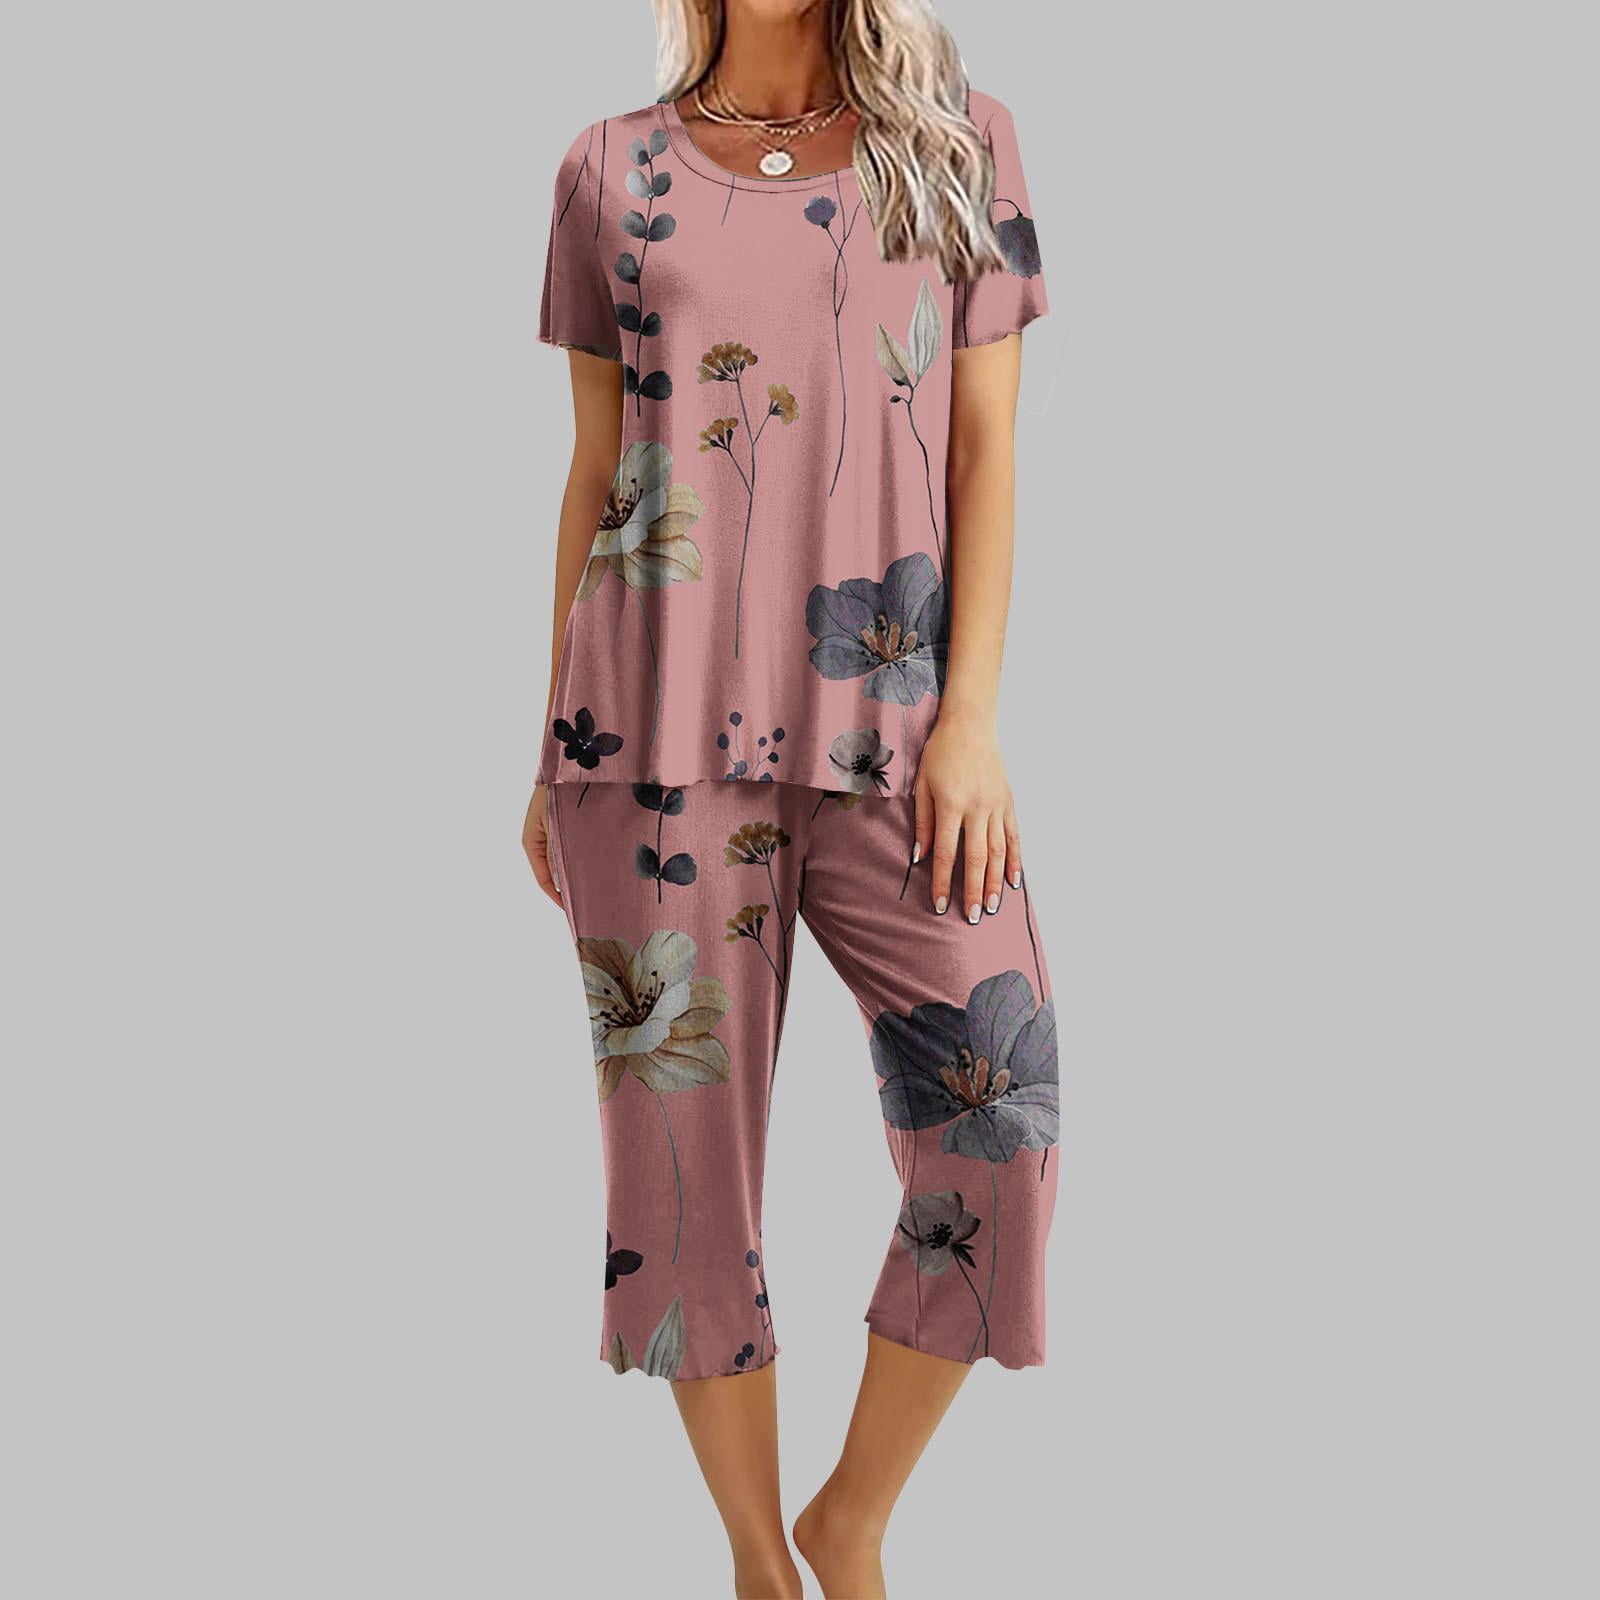 Tdoqot Pajamas for Women- Printed Soft Short Sleeve Top and Capri Pants ...